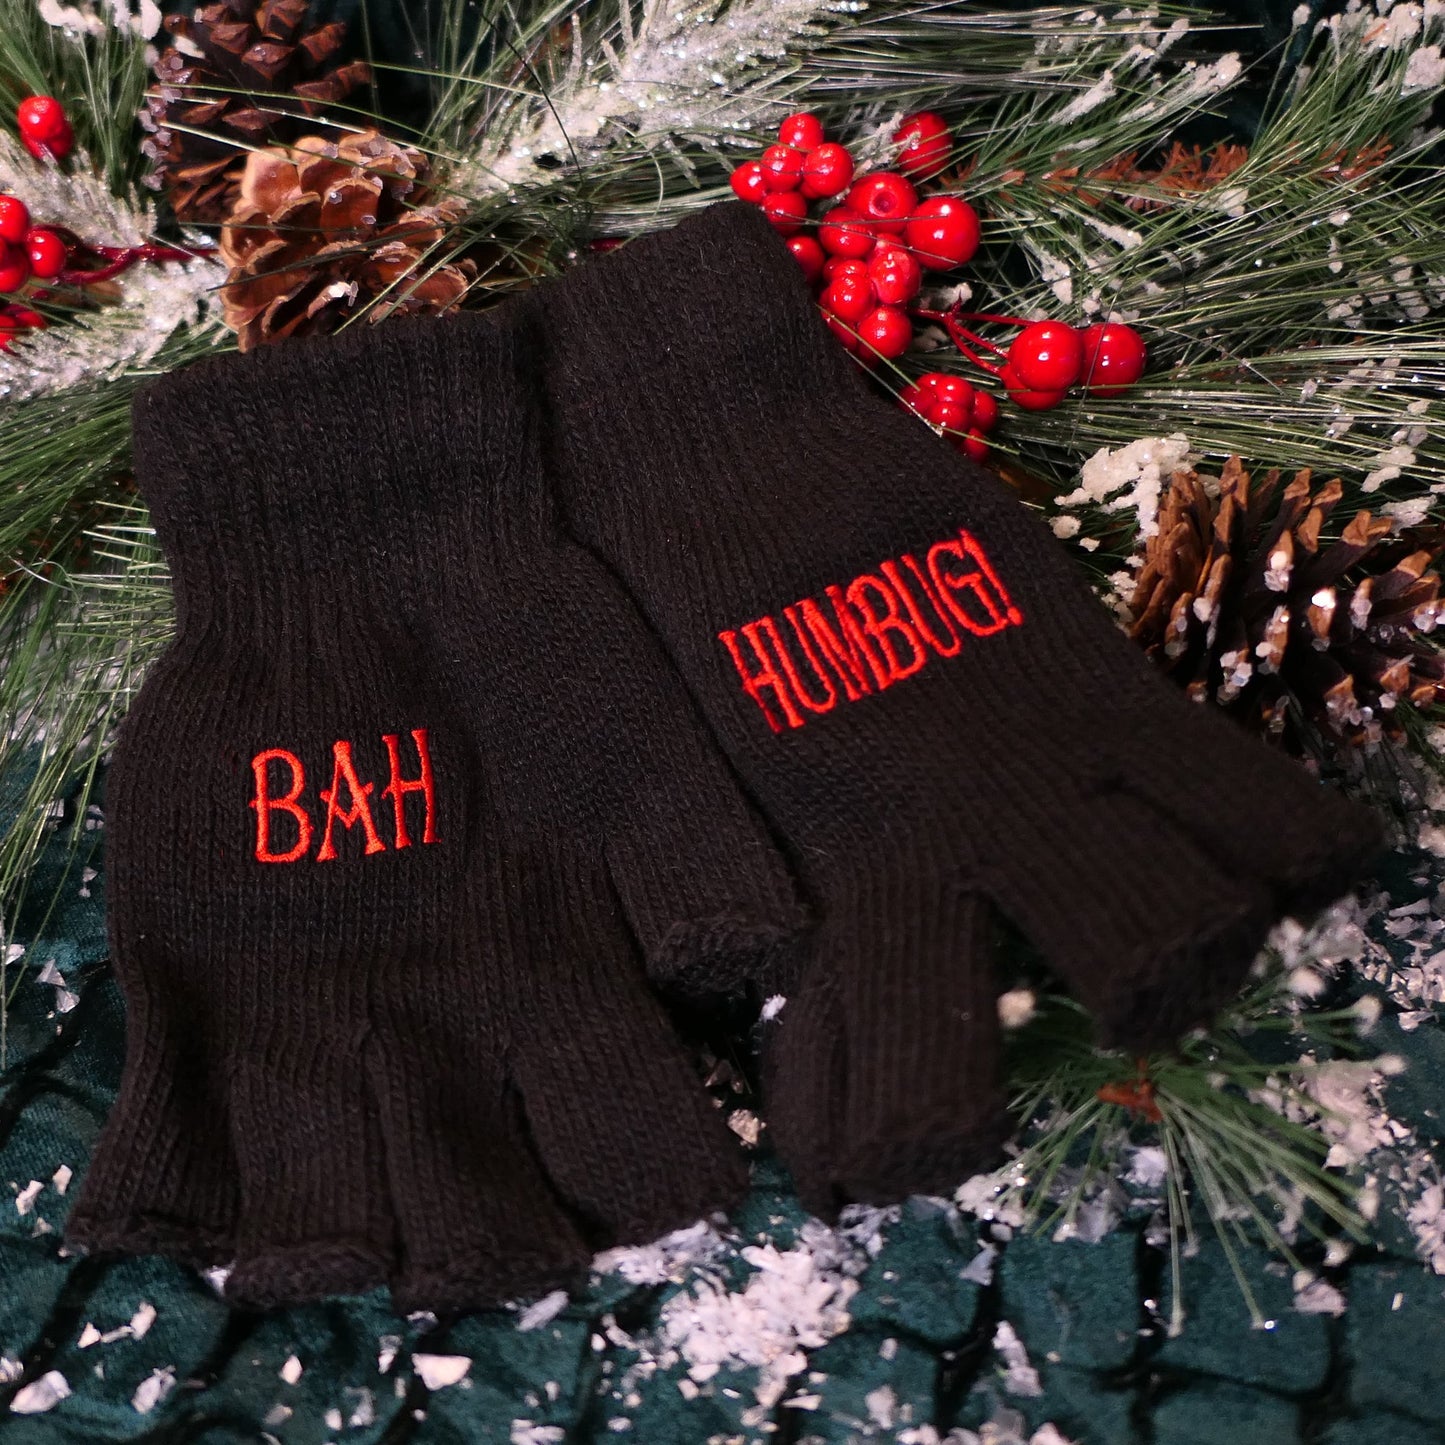 BAH HUMBUG Fingerless Gloves / Dickens At Home Souvenir Merchandise / Dickens Christmas Fair